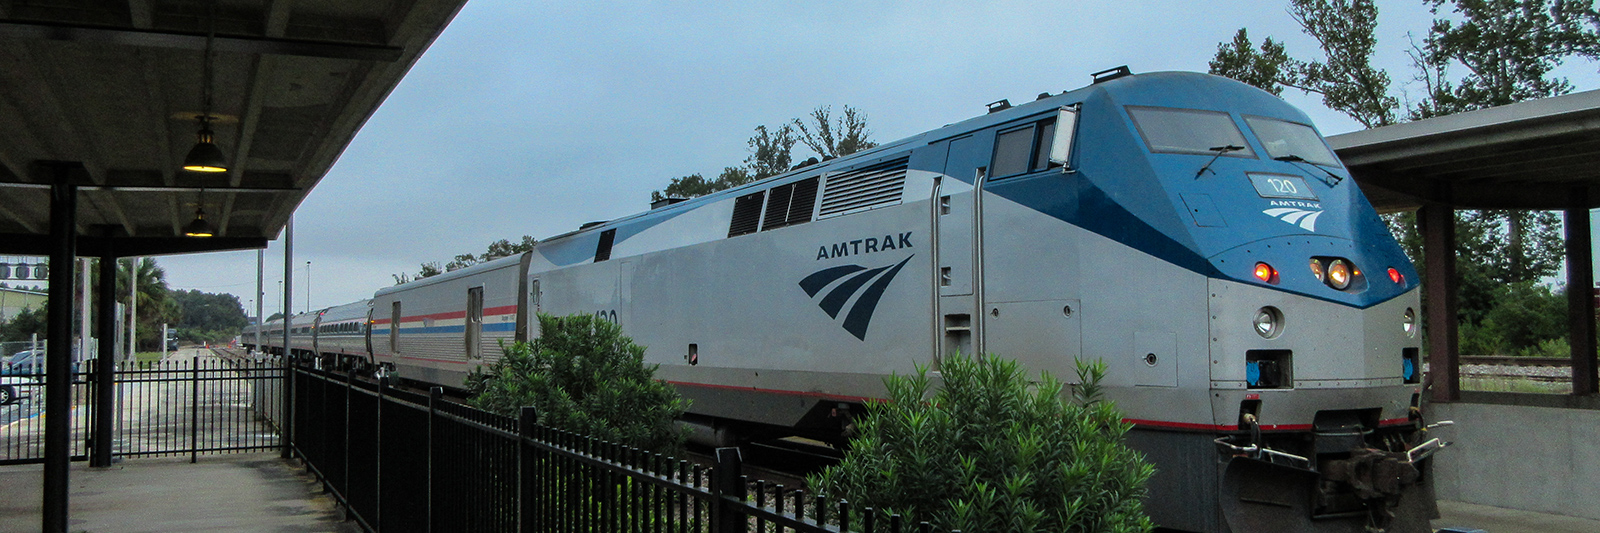 The Amtrak Palmetto at Savannah Station, Savannah, Georgia, USA, 2015.